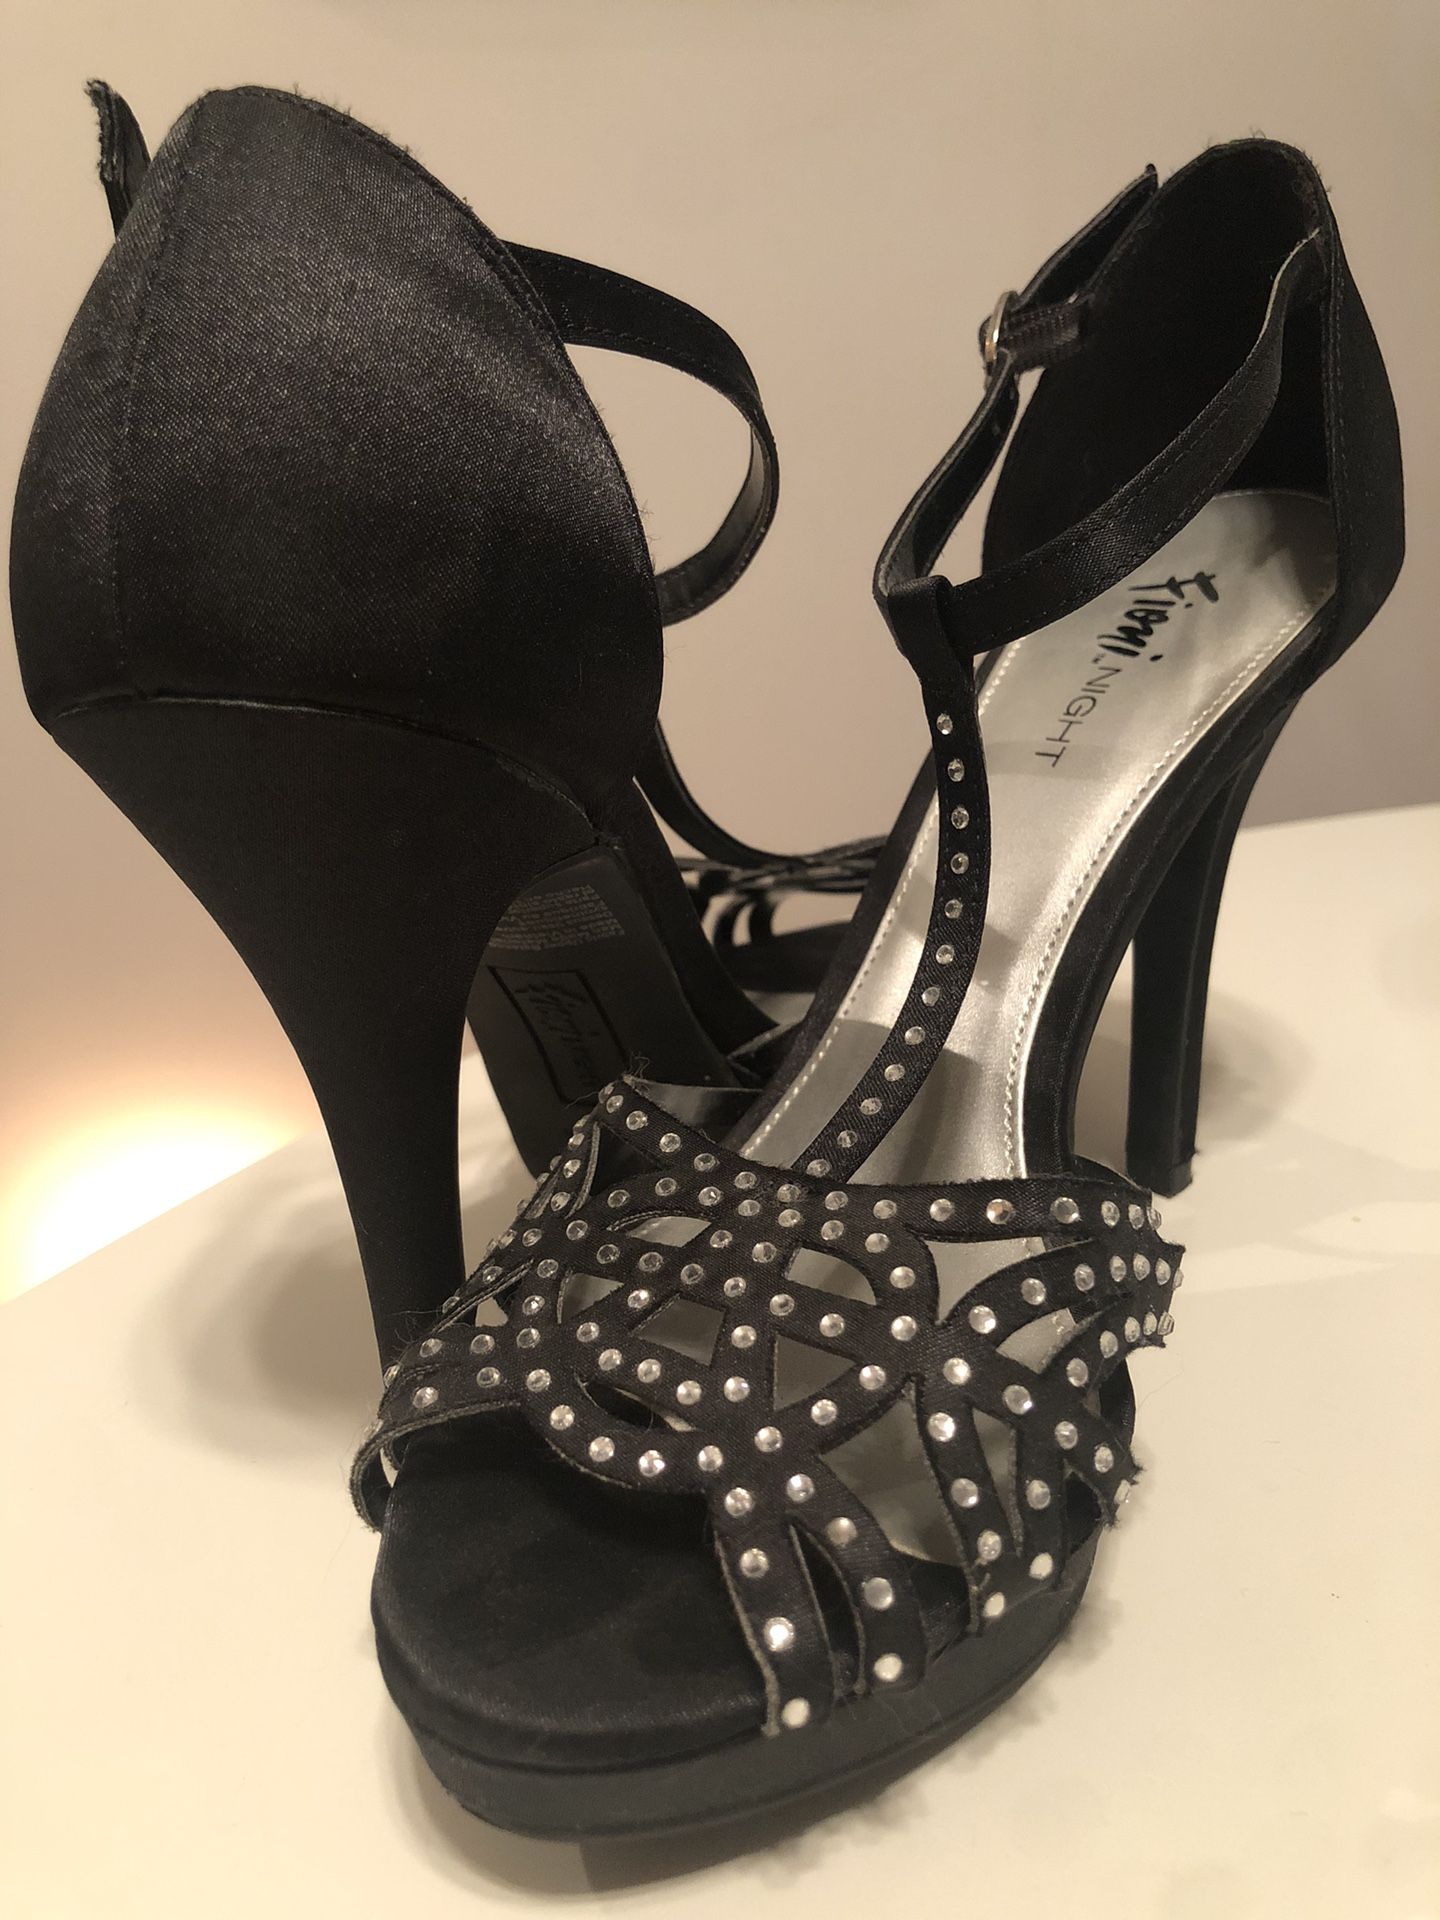 Black high heels with rhinestones